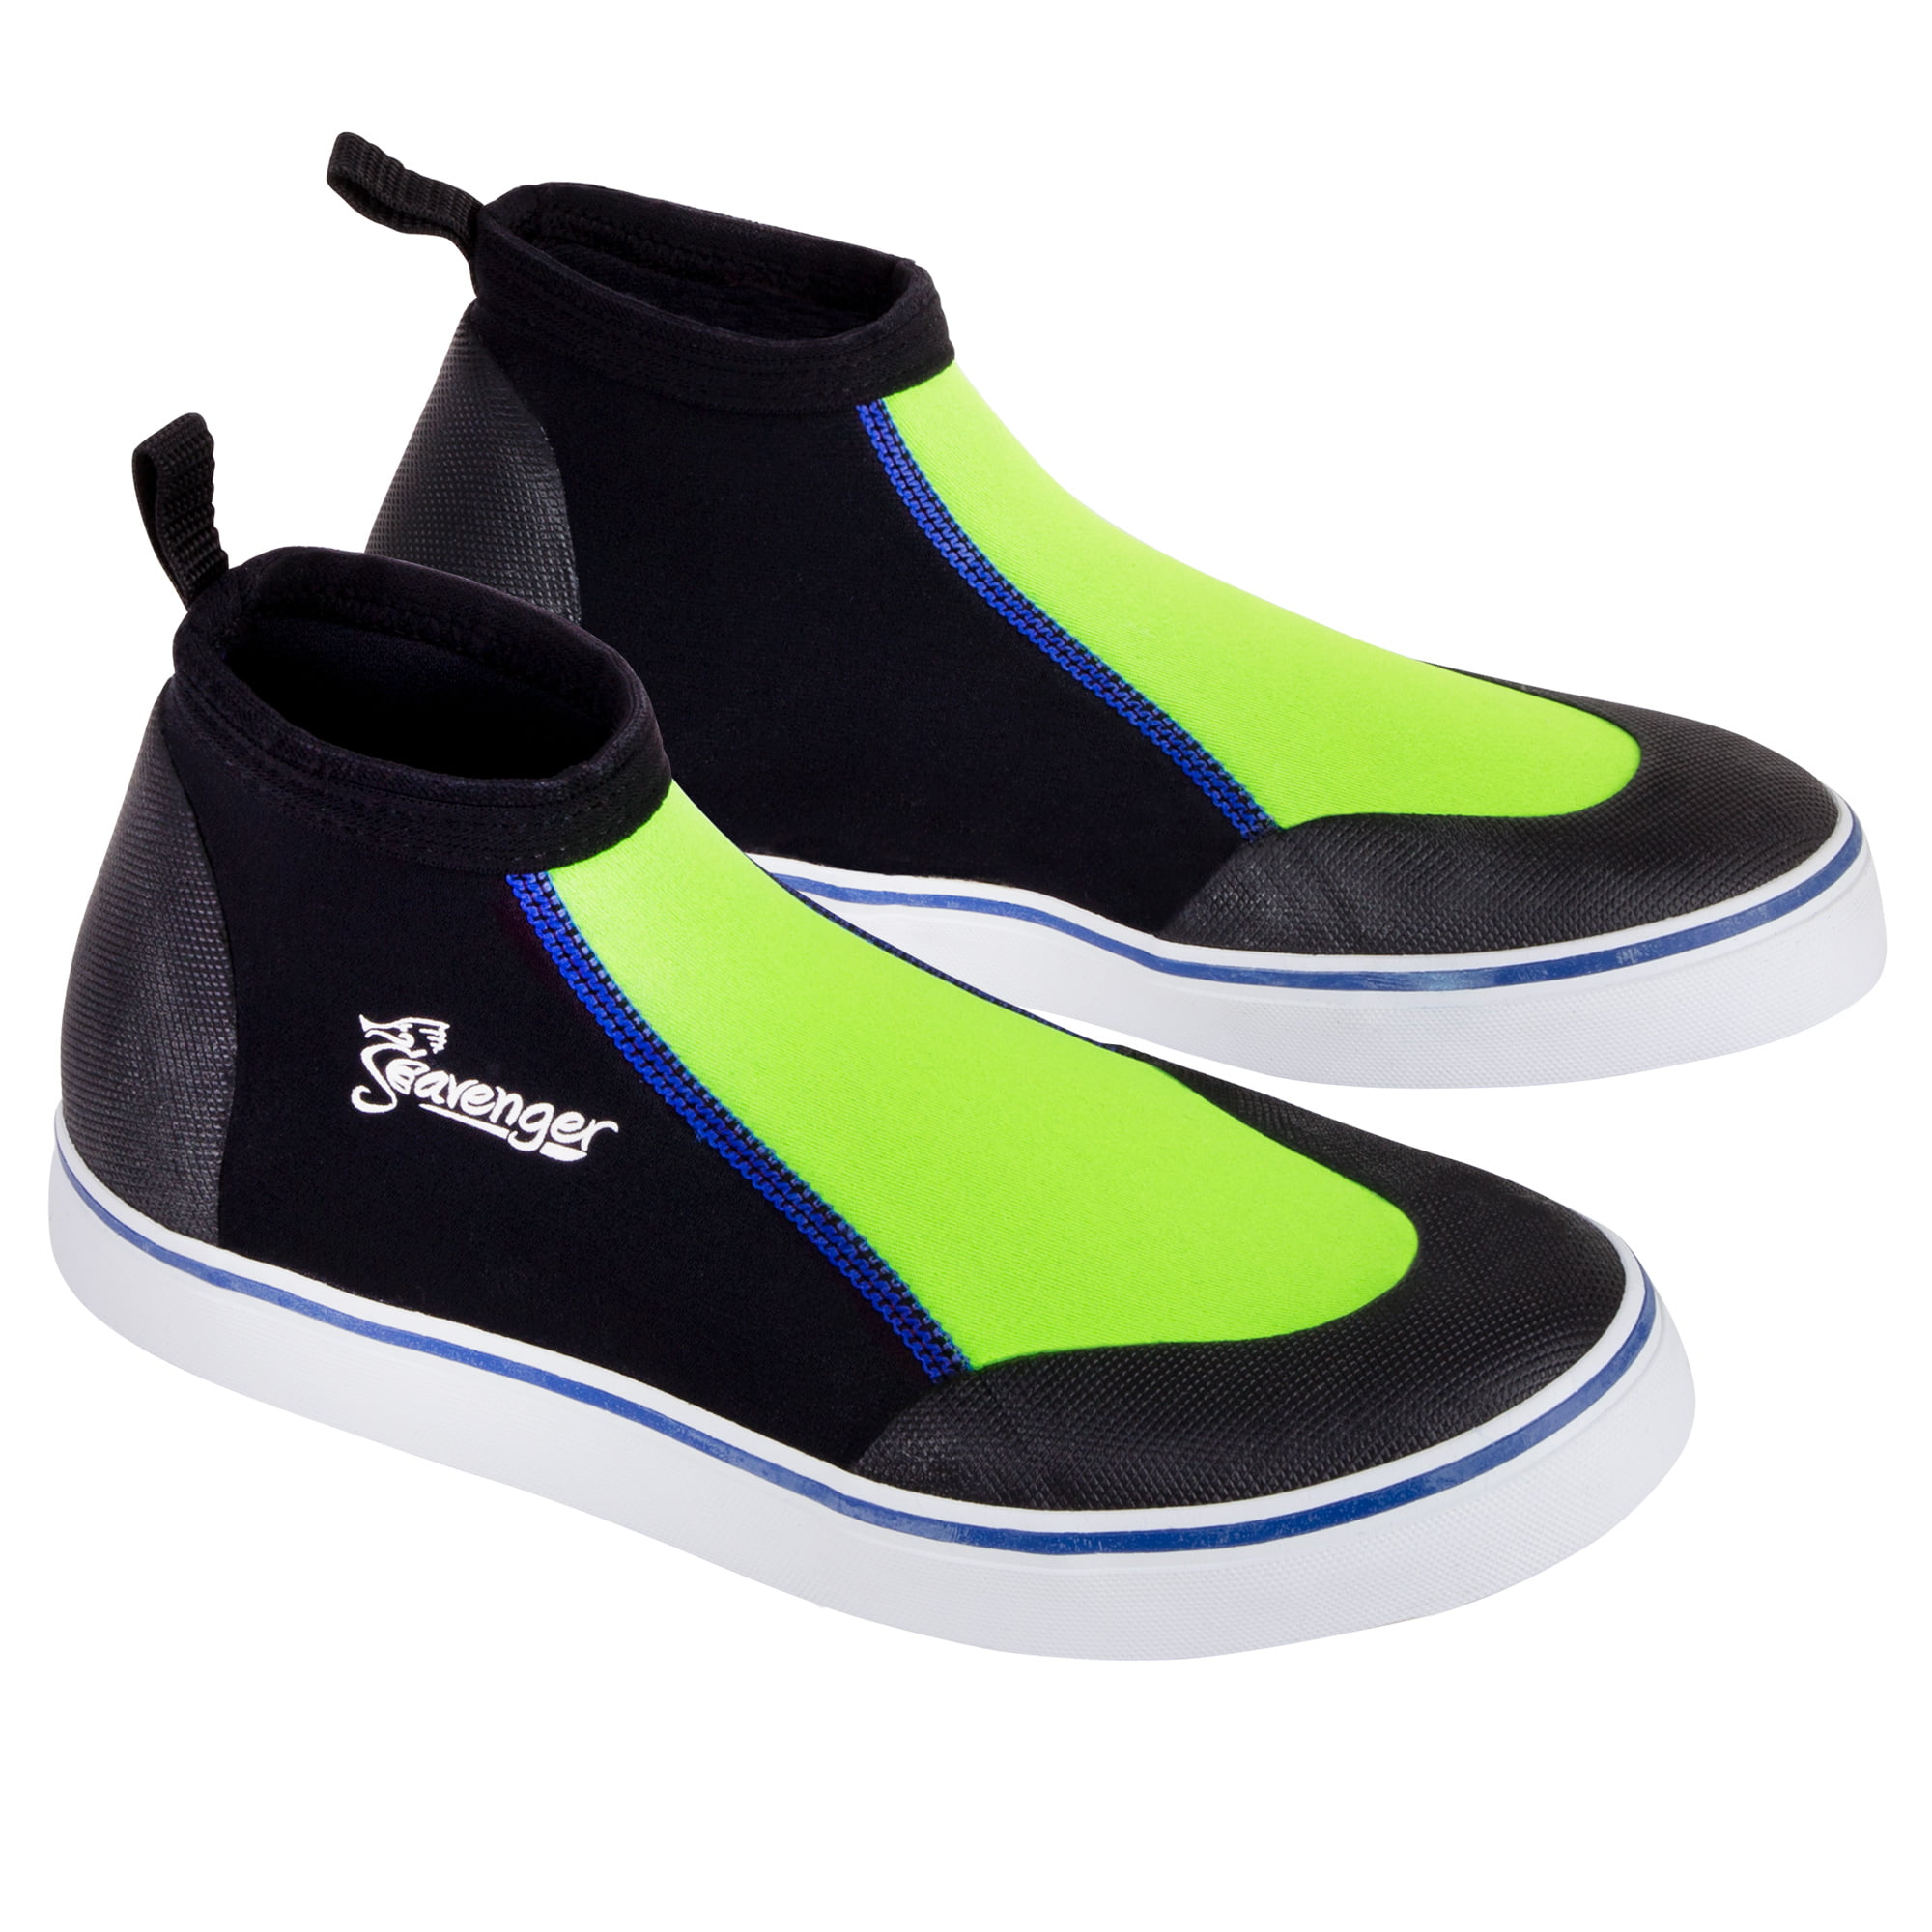 Snorkel Green Seavenger Sneaker Style Aqua Shoes 3mm Neoprene High Top Dive 